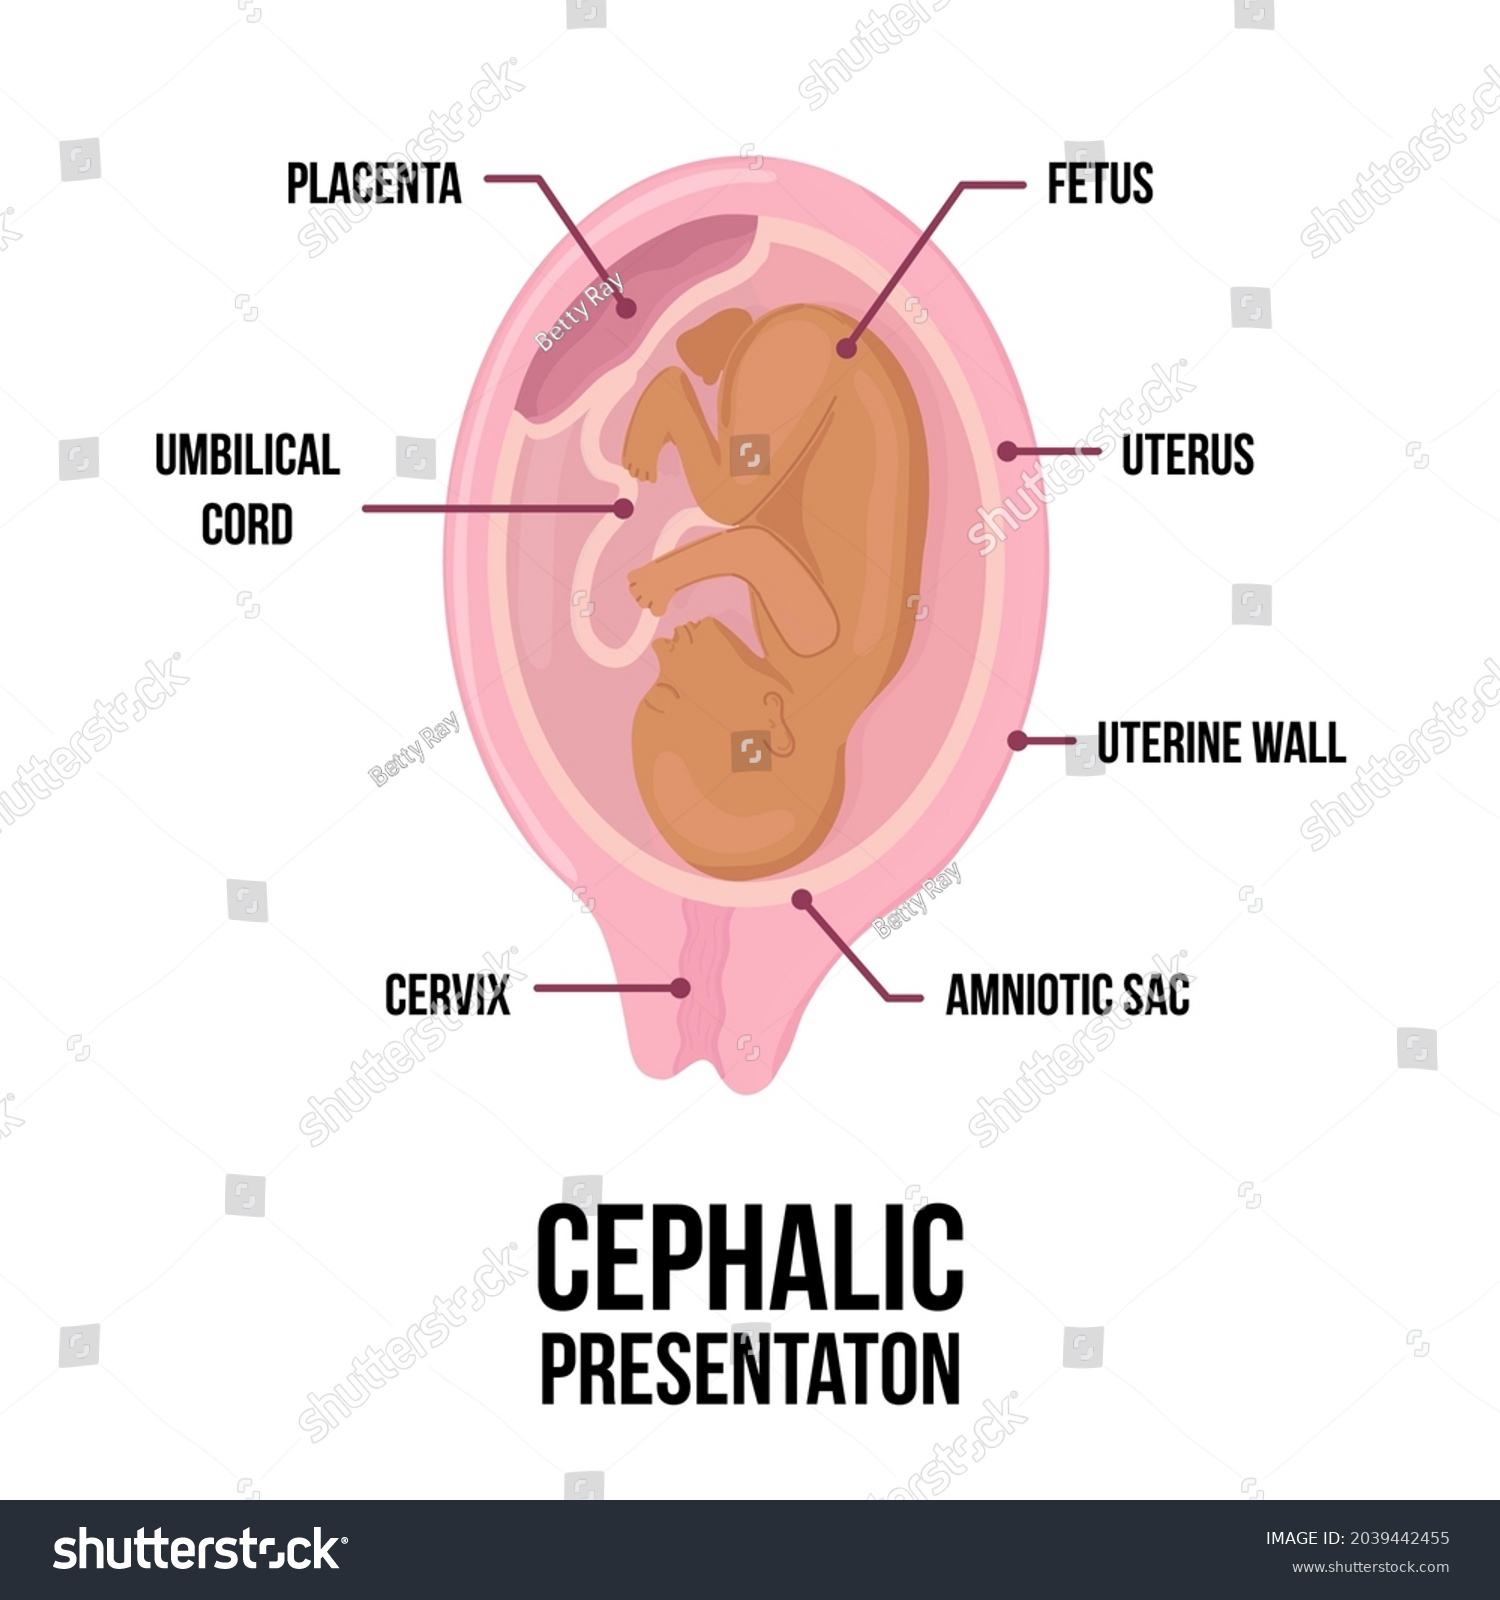 is cephalic presentation normal at 23 weeks